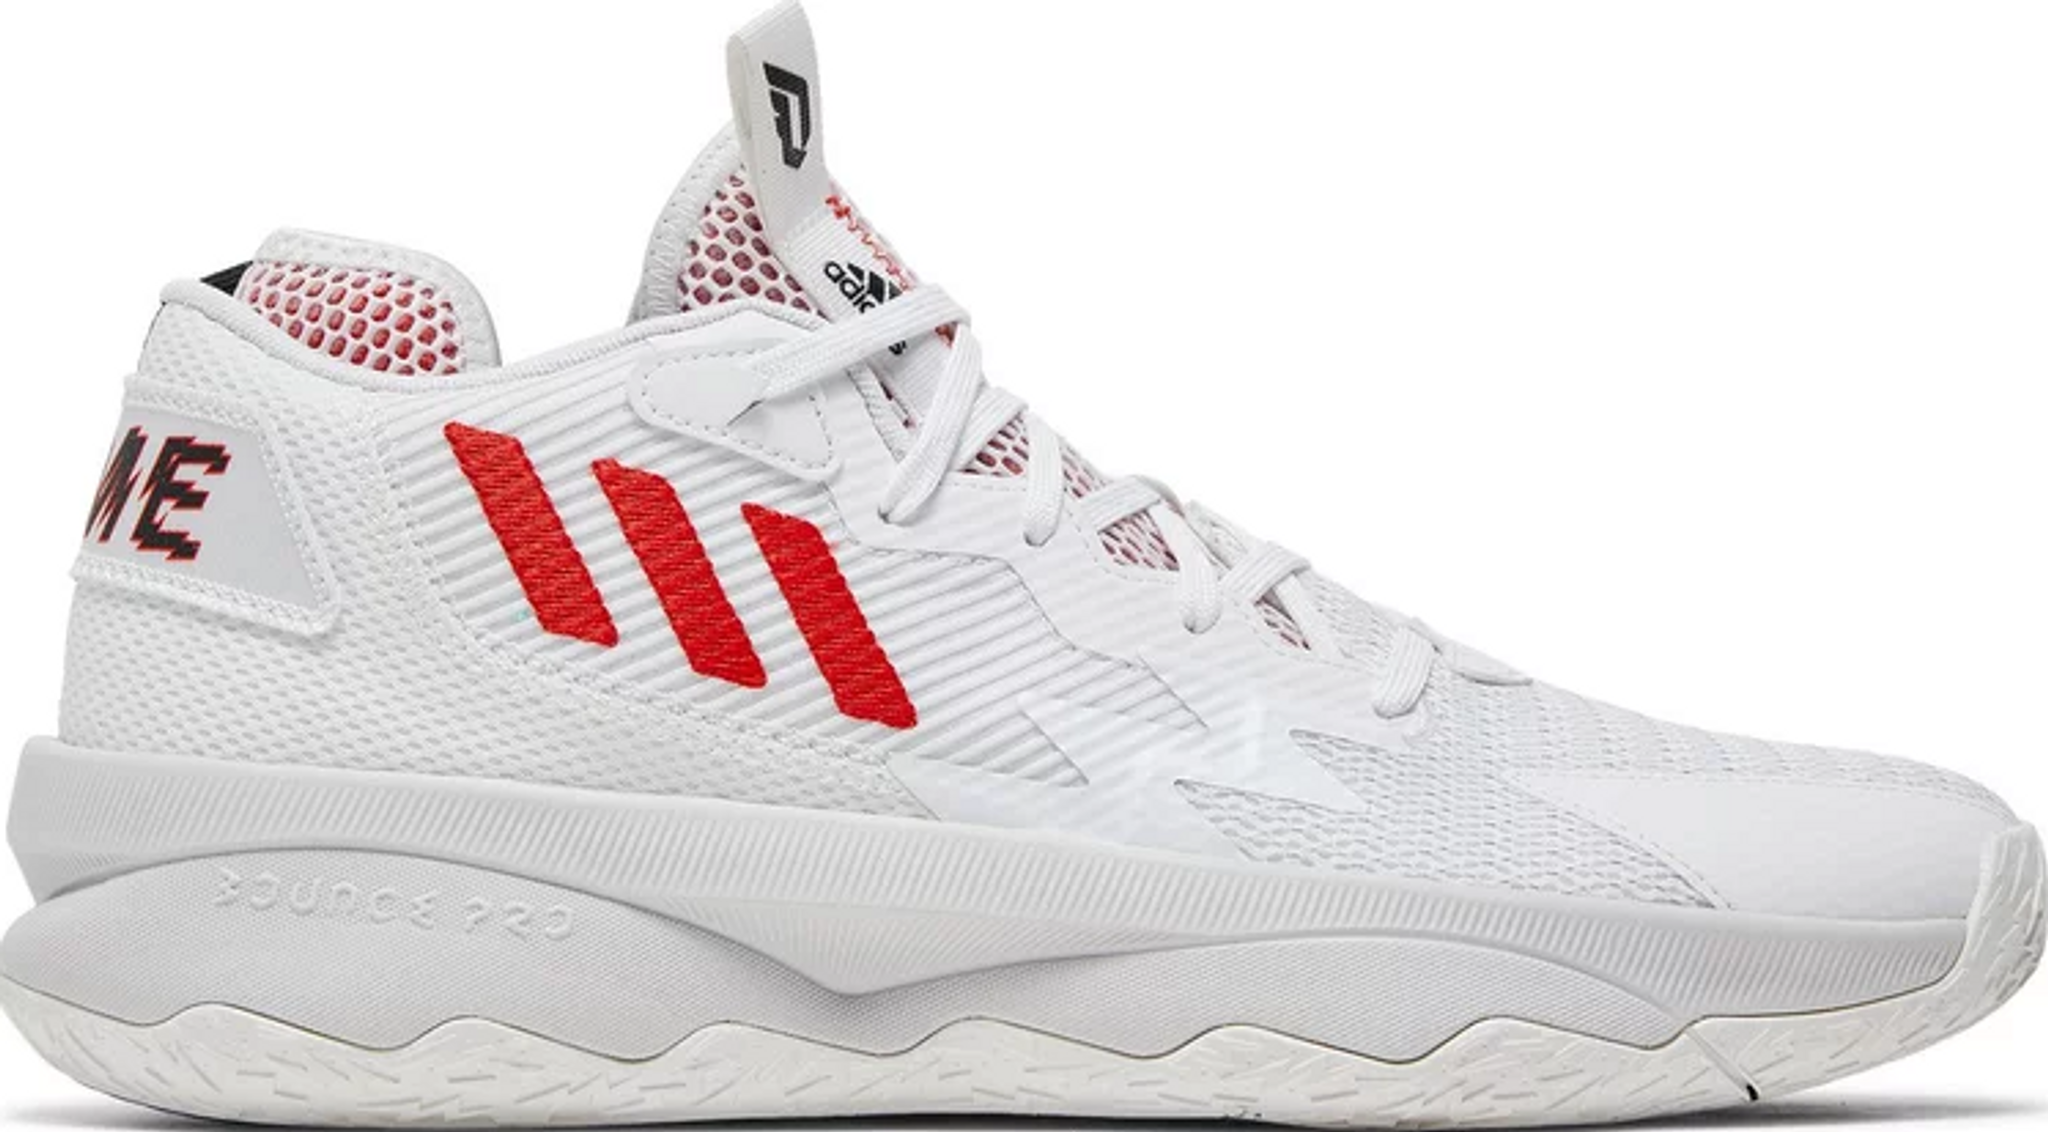 Nebraska Cornhuskers Adidas Basketball Shoe Men's White/Red New 12.5 9